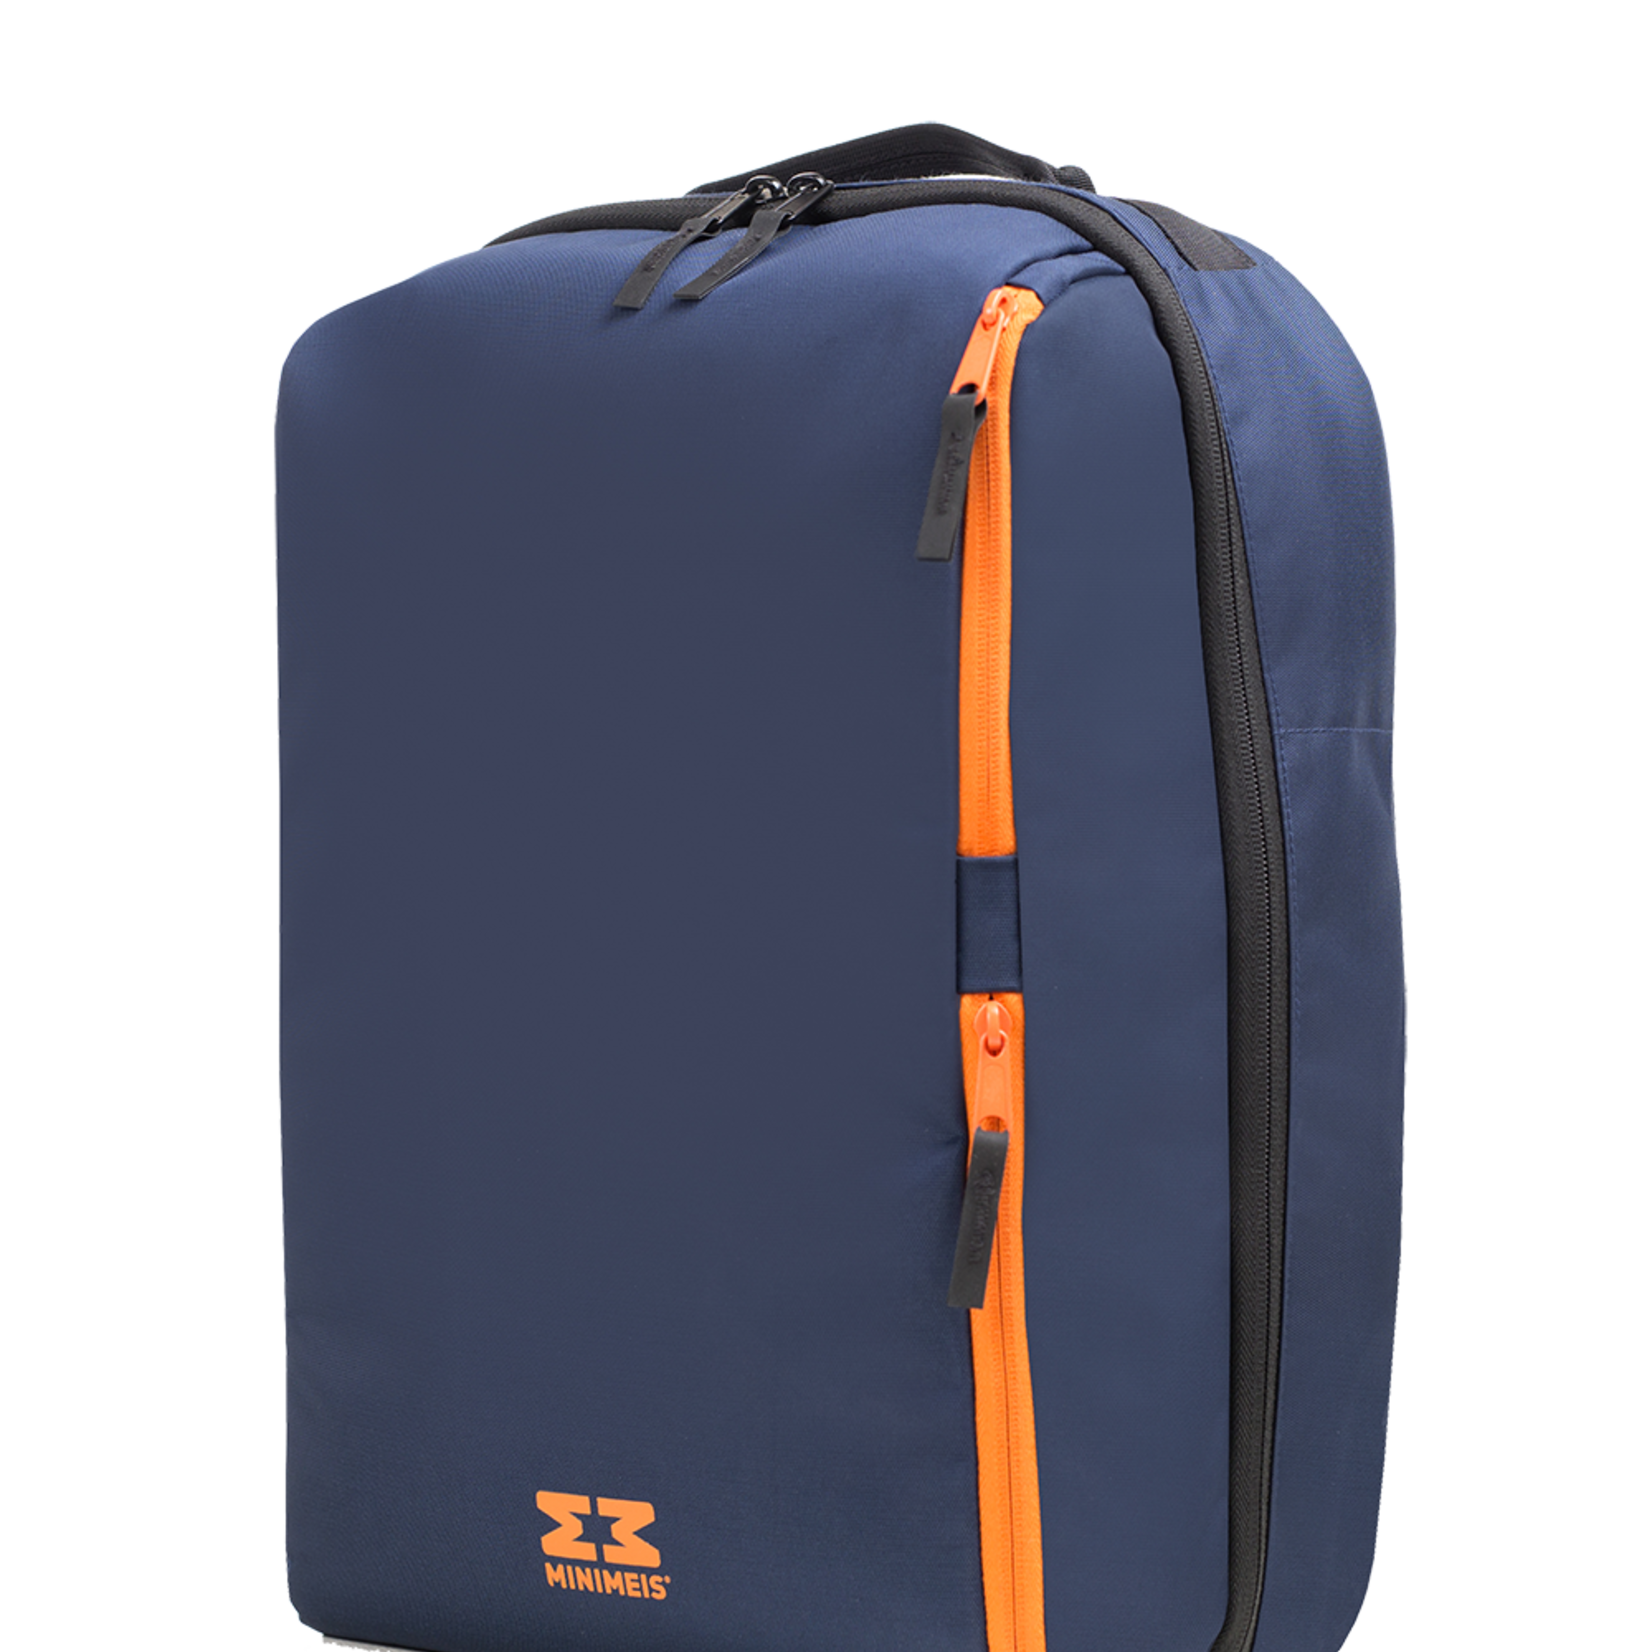 Minimeis Backpack - Navy Blue